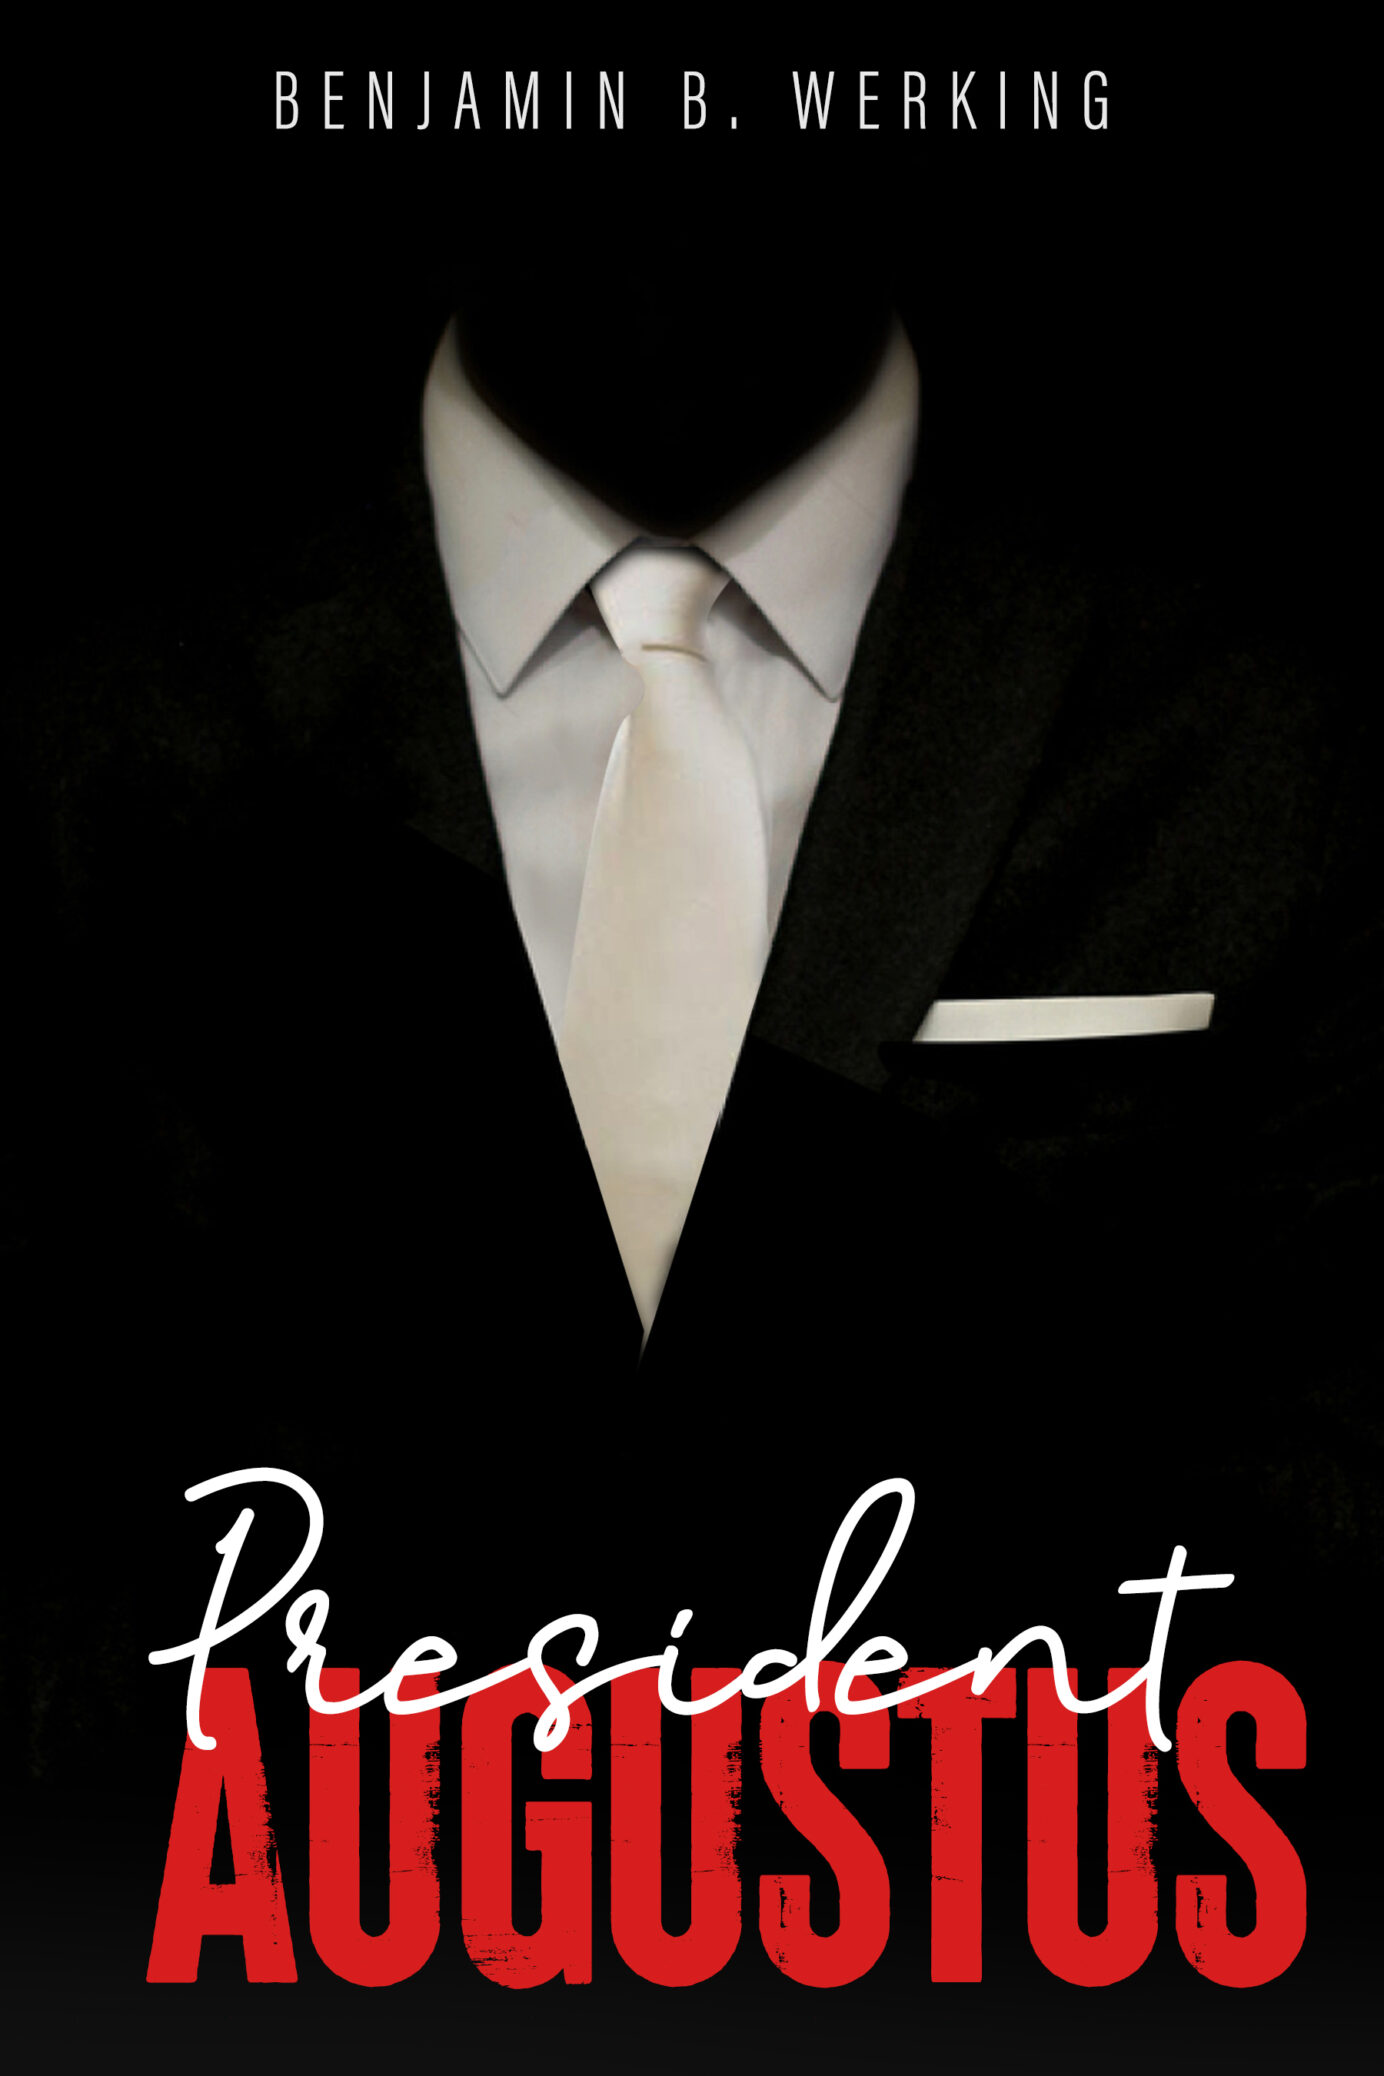 President Augustus cover